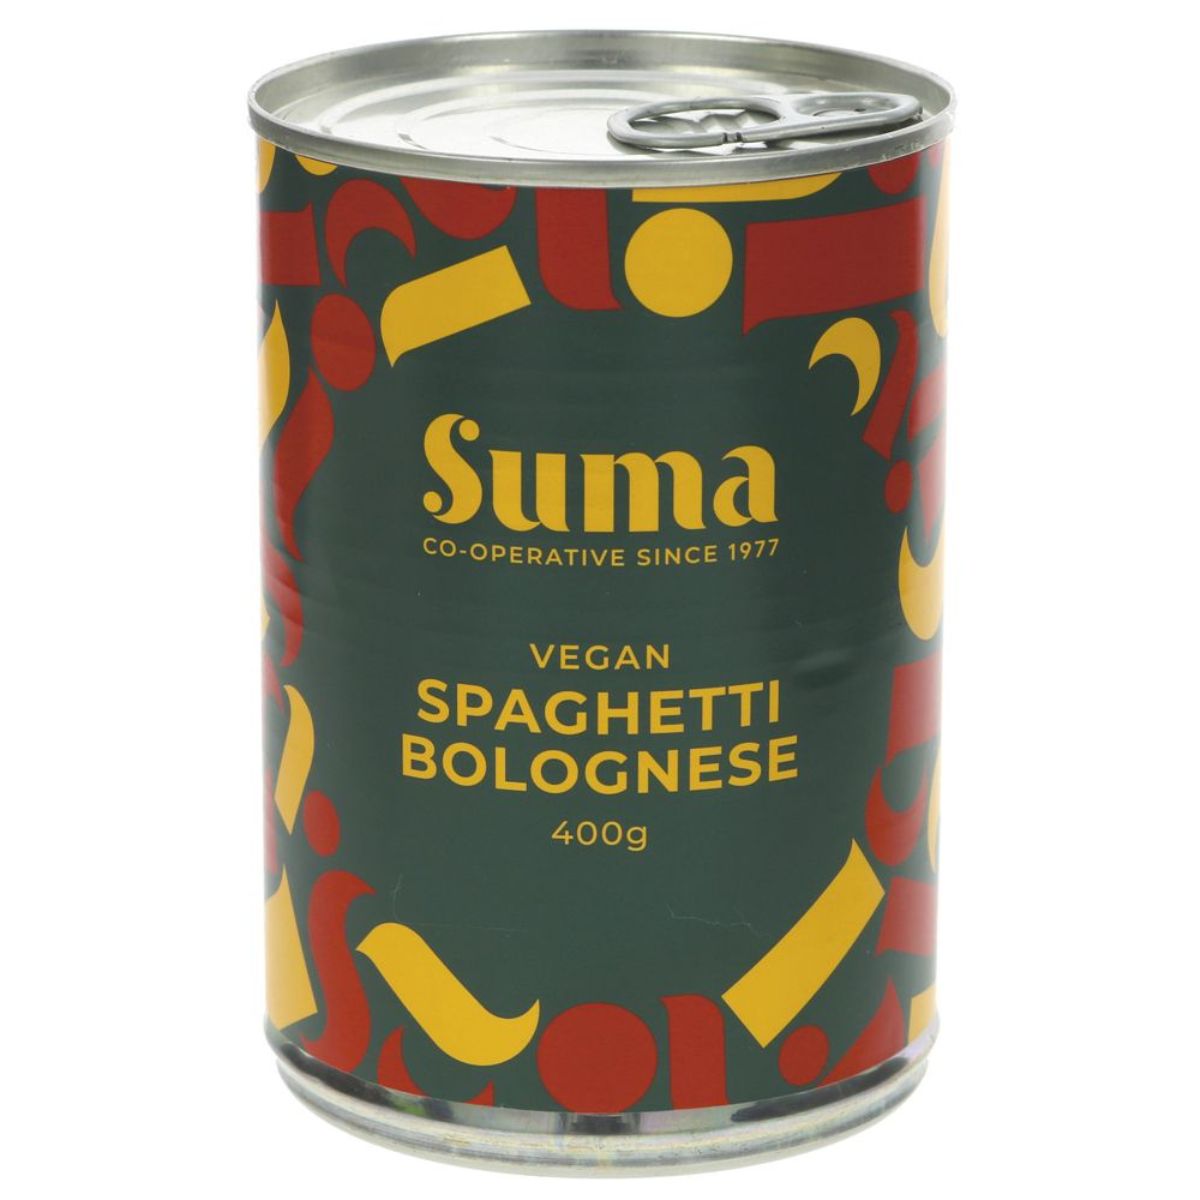 Suma Vegan Spaghetti Bolognese - 400g